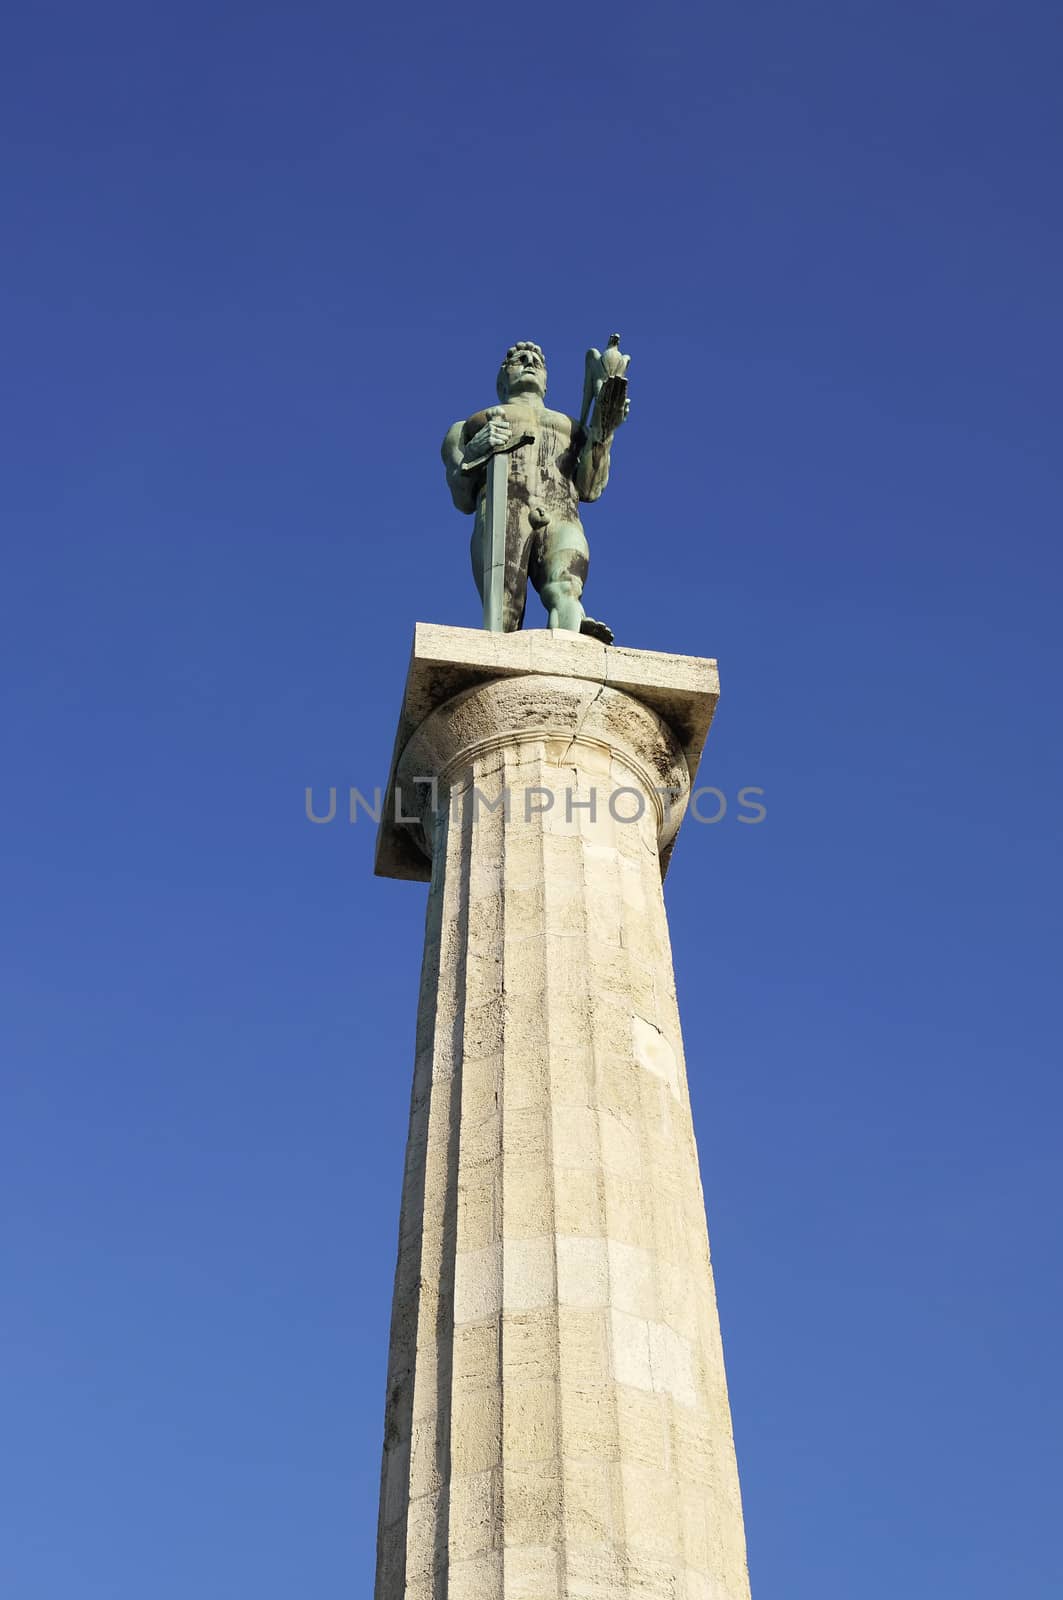 Victor monument at Kalemegdan fortress in Belgrade, Serbia